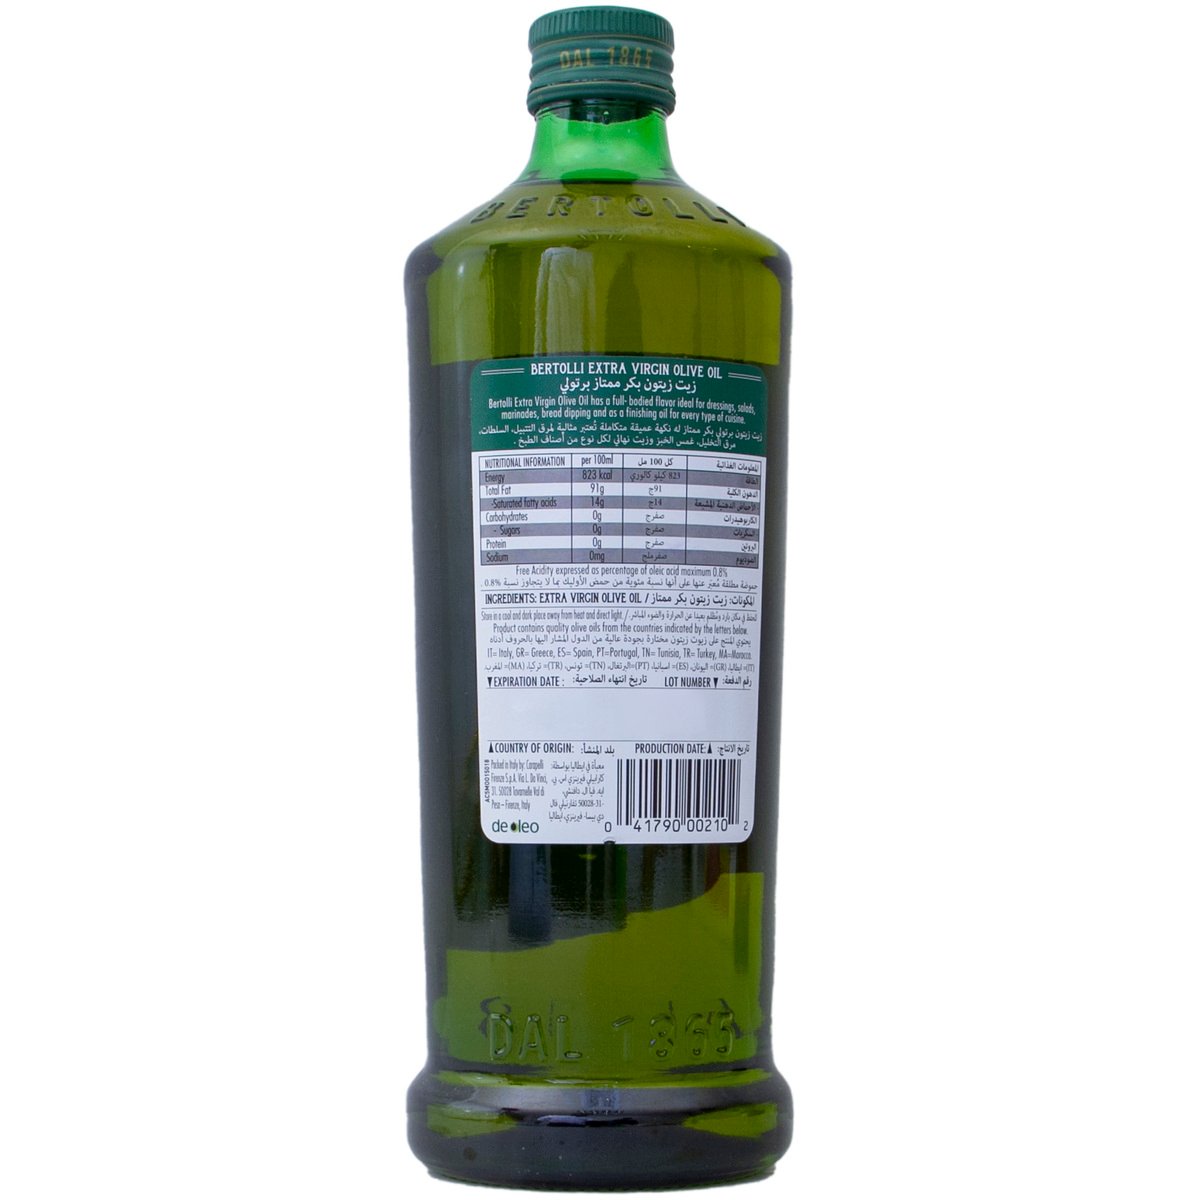 Bertolli Extra Virgin Olive Oil 1 Litre